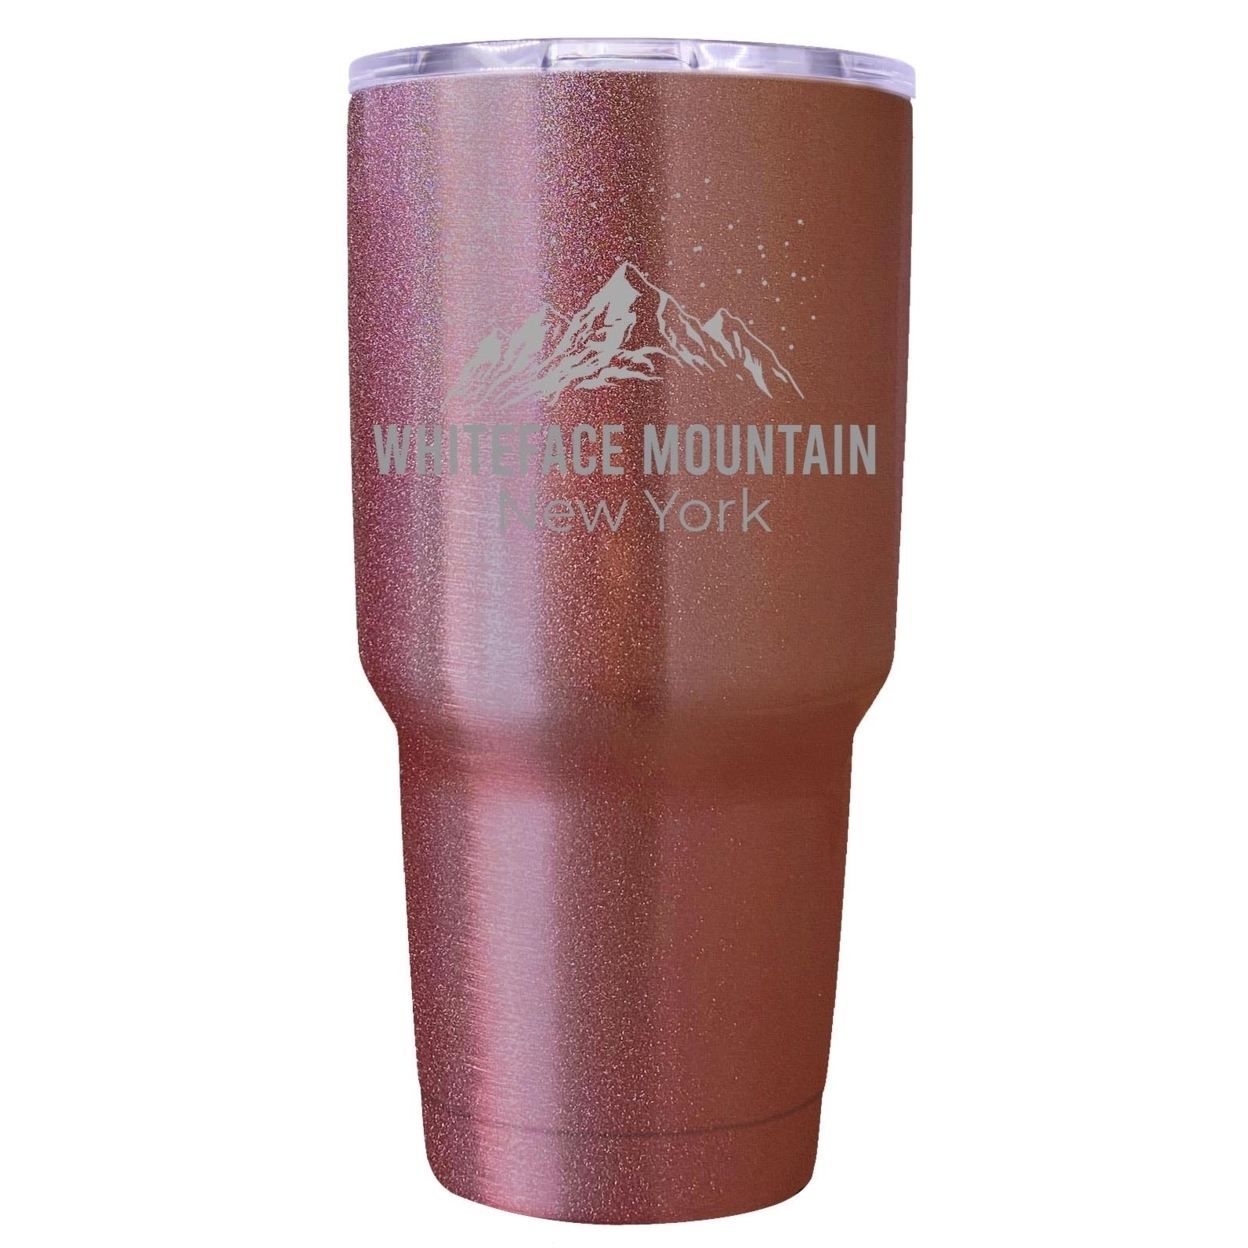 Whiteface Mountain New York Ski Snowboard Winter Souvenir Laser Engraved 24 Oz Insulated Stainless Steel Tumbler - Rose Gold